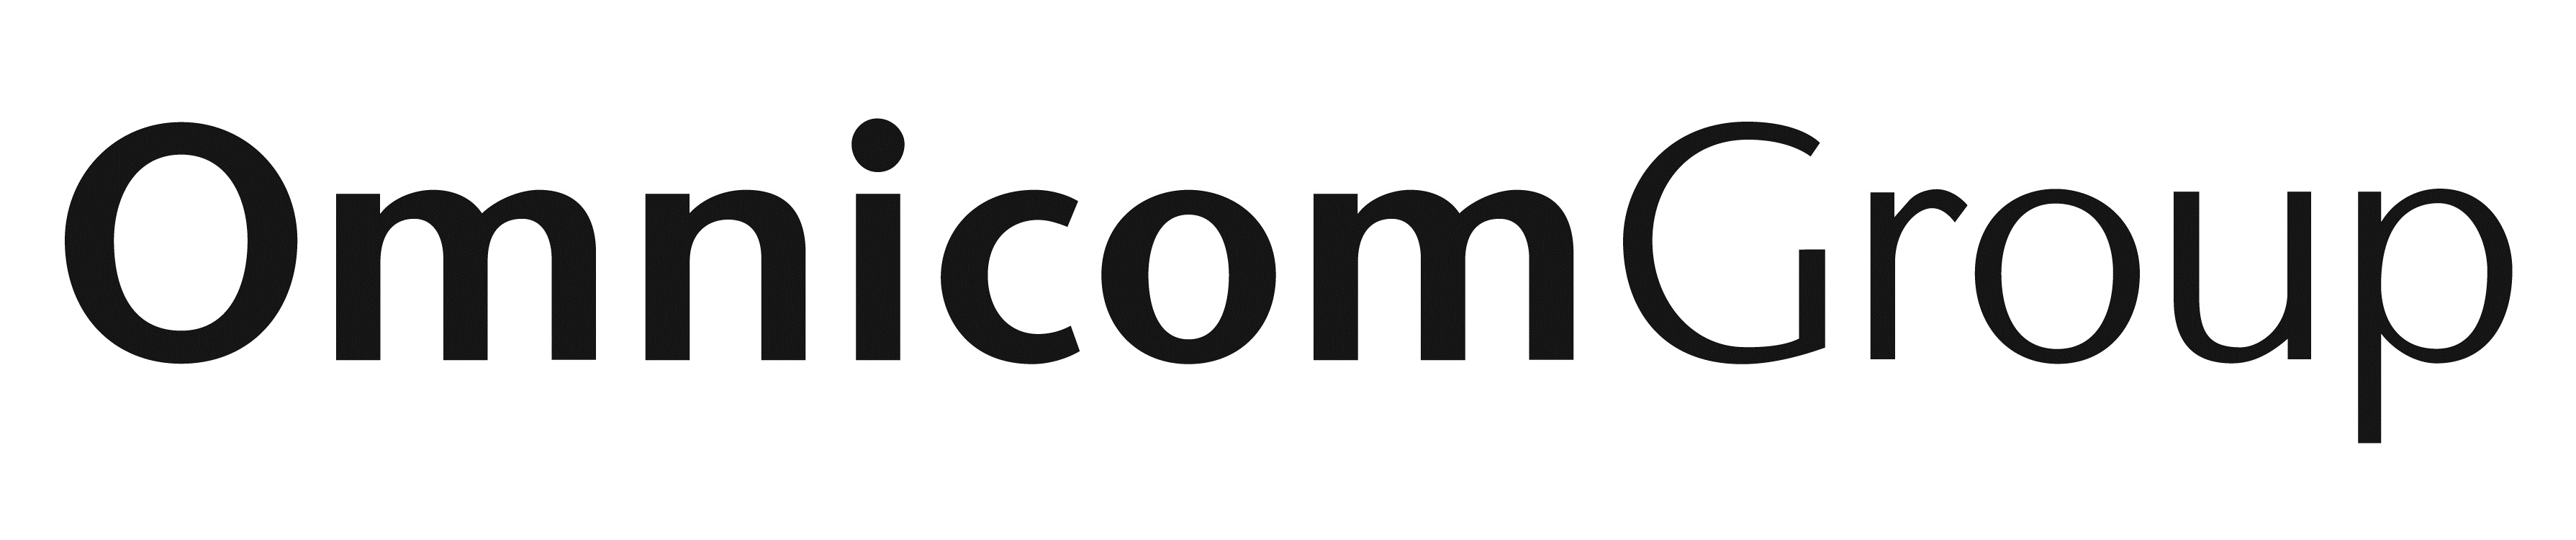 File:Omnicom Group Logo.png